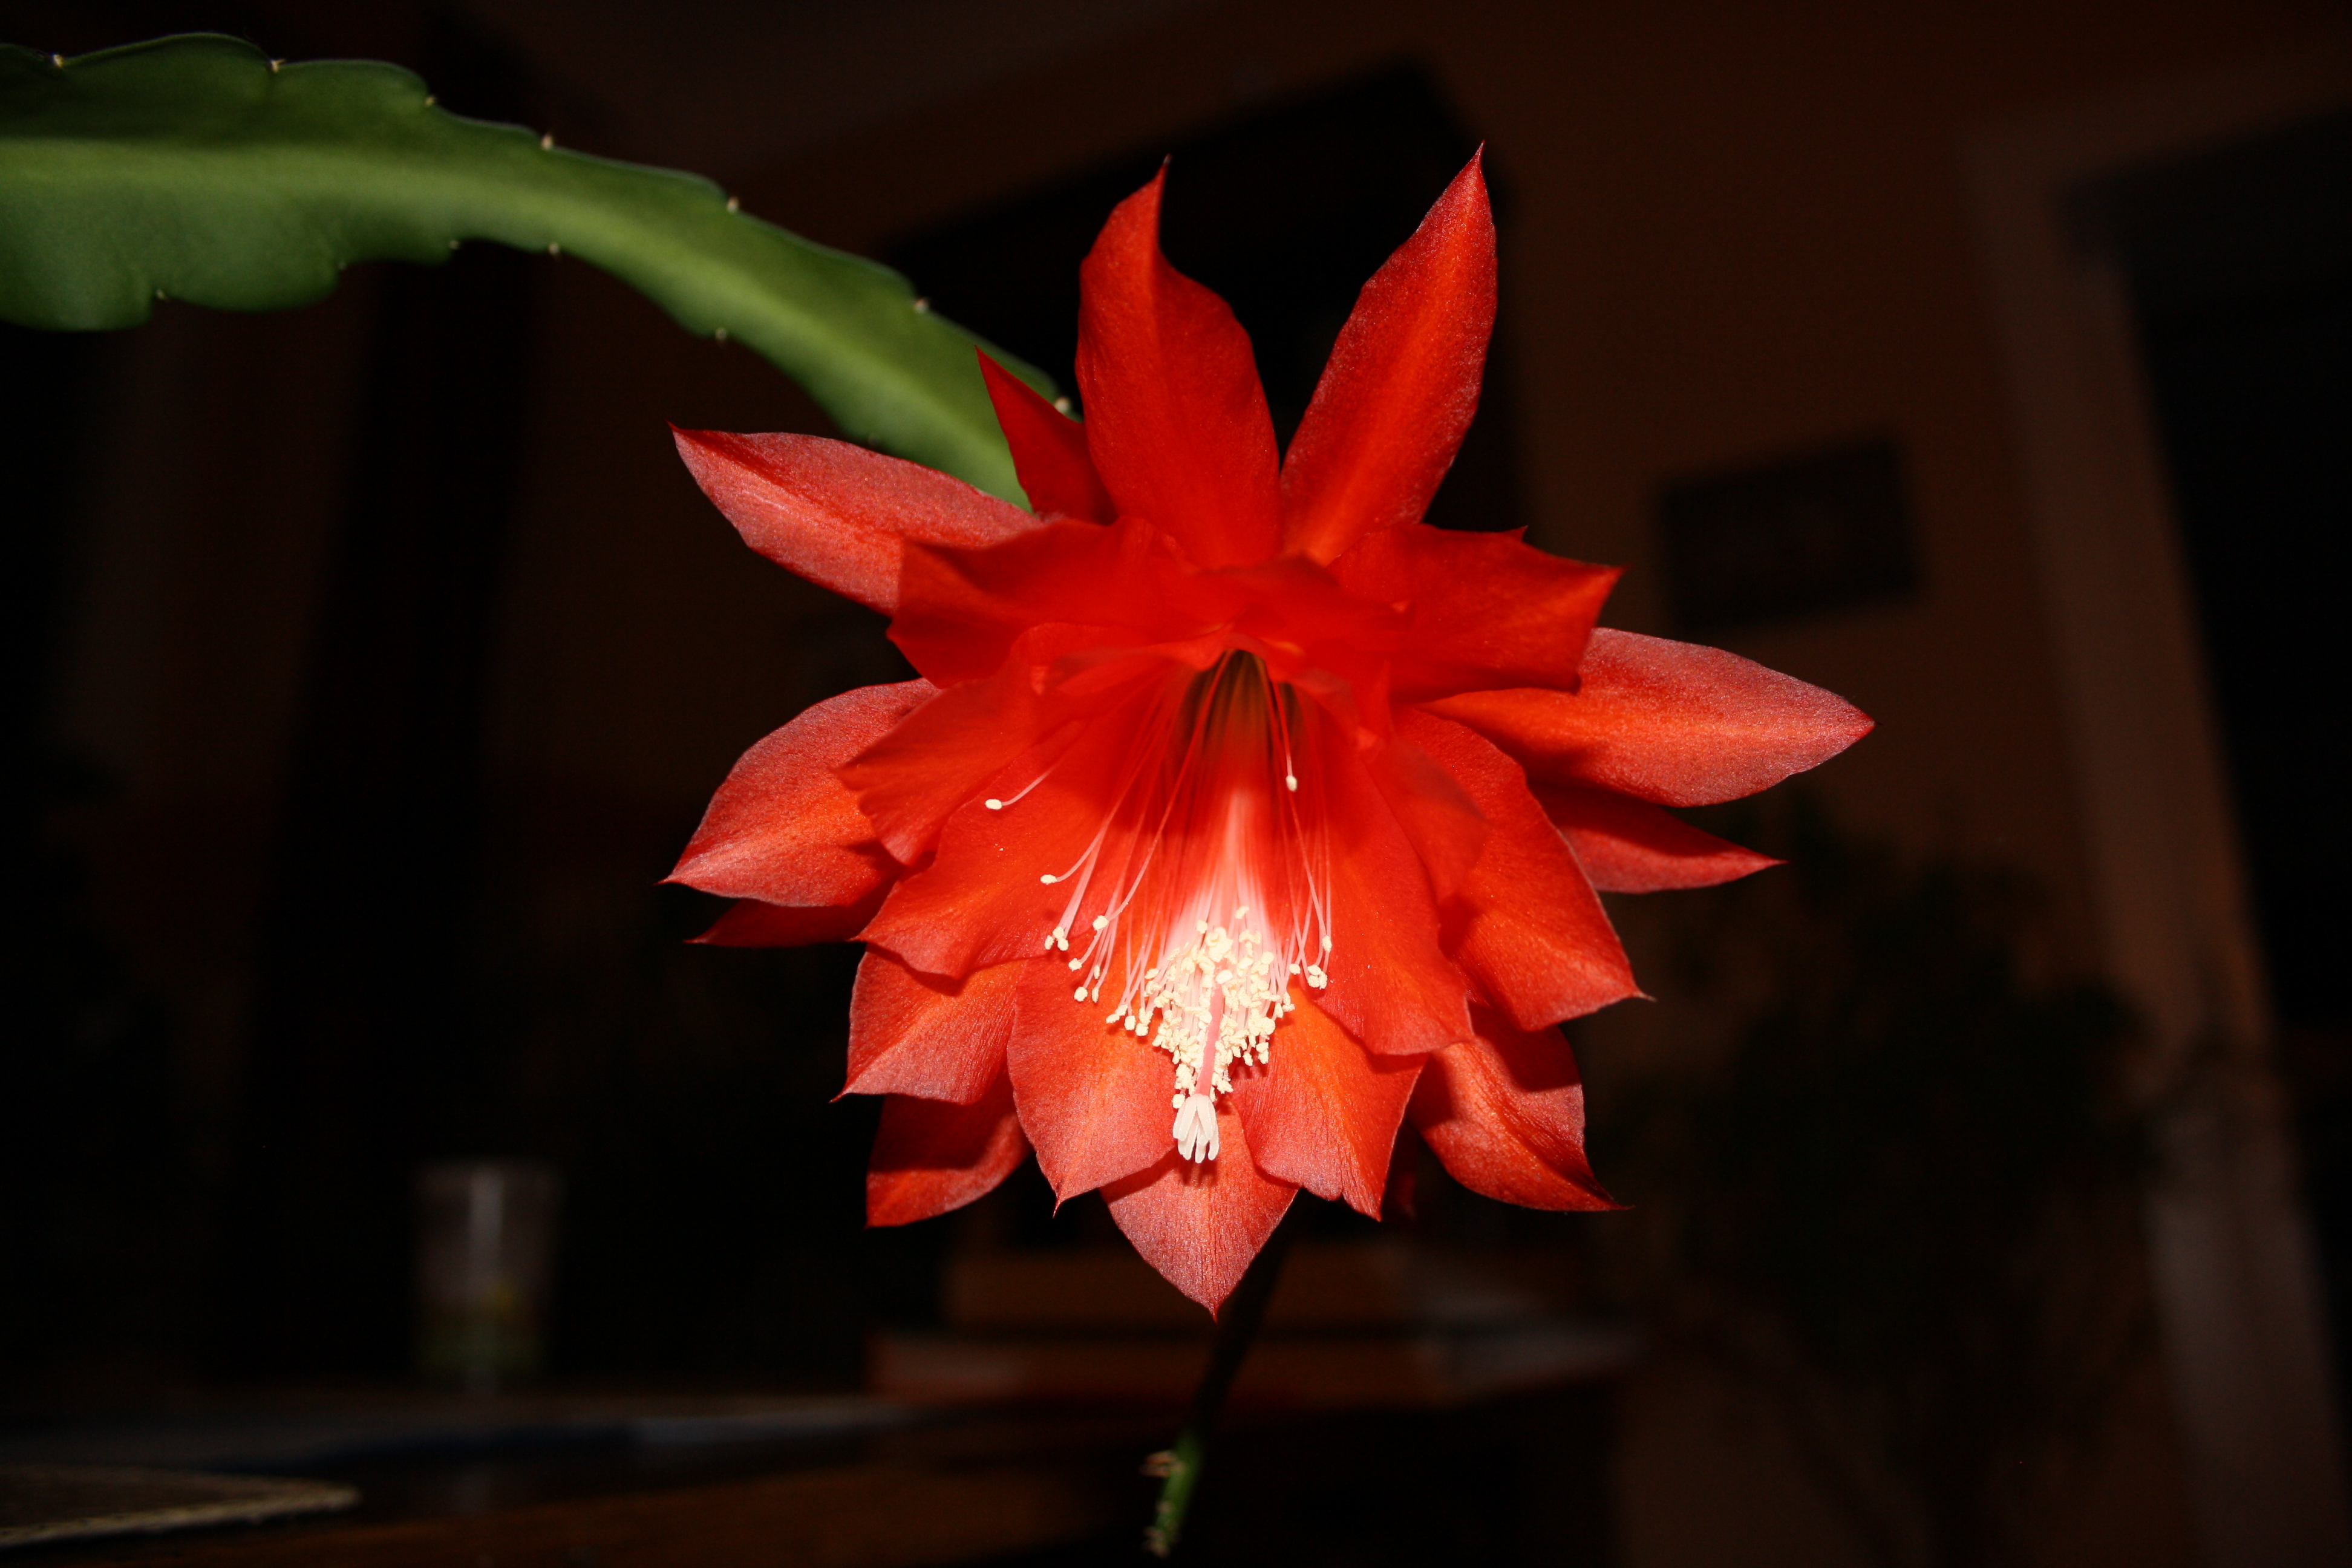 File:Red cactus flower in dark room.jpg - Wikimedia Commons